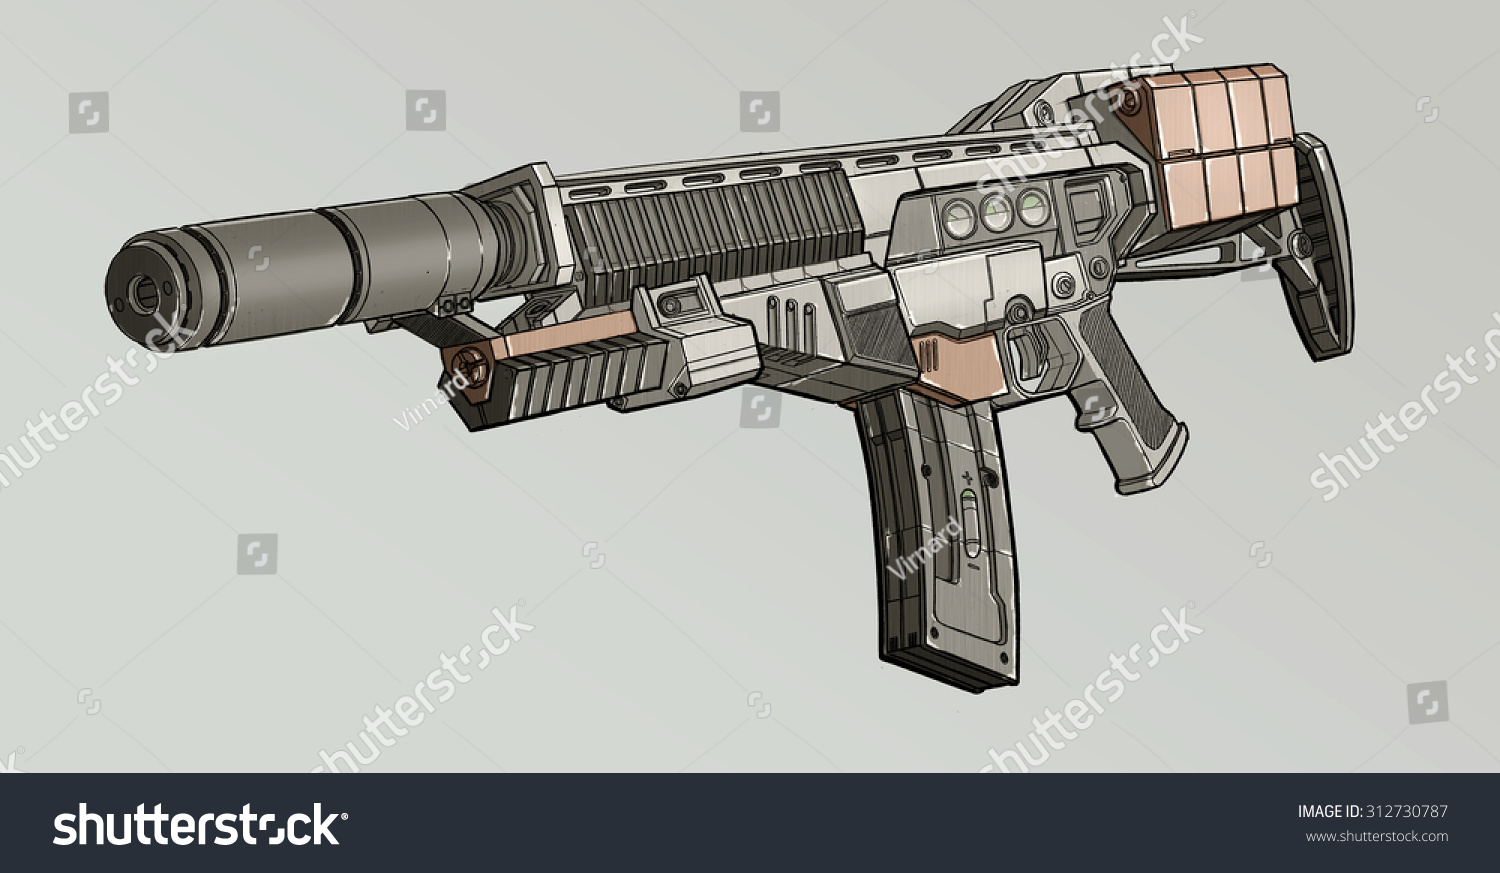 stock-photo-futuristic-military-assault-rifle-312730787.jpg